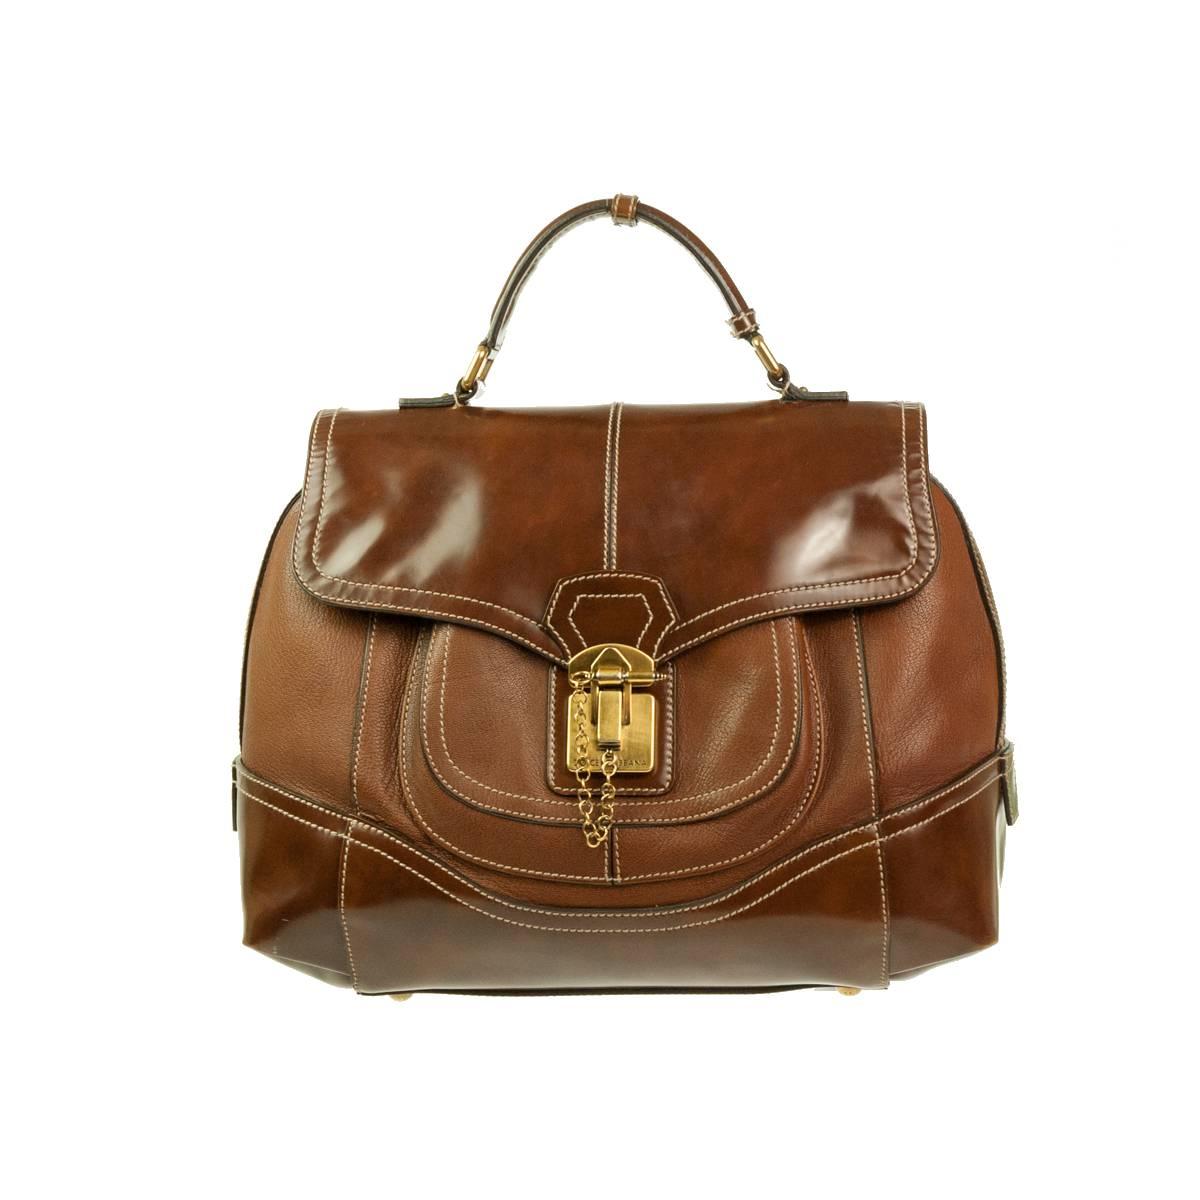 Dolce&Gabbana "Miss Catch" Leather Bag